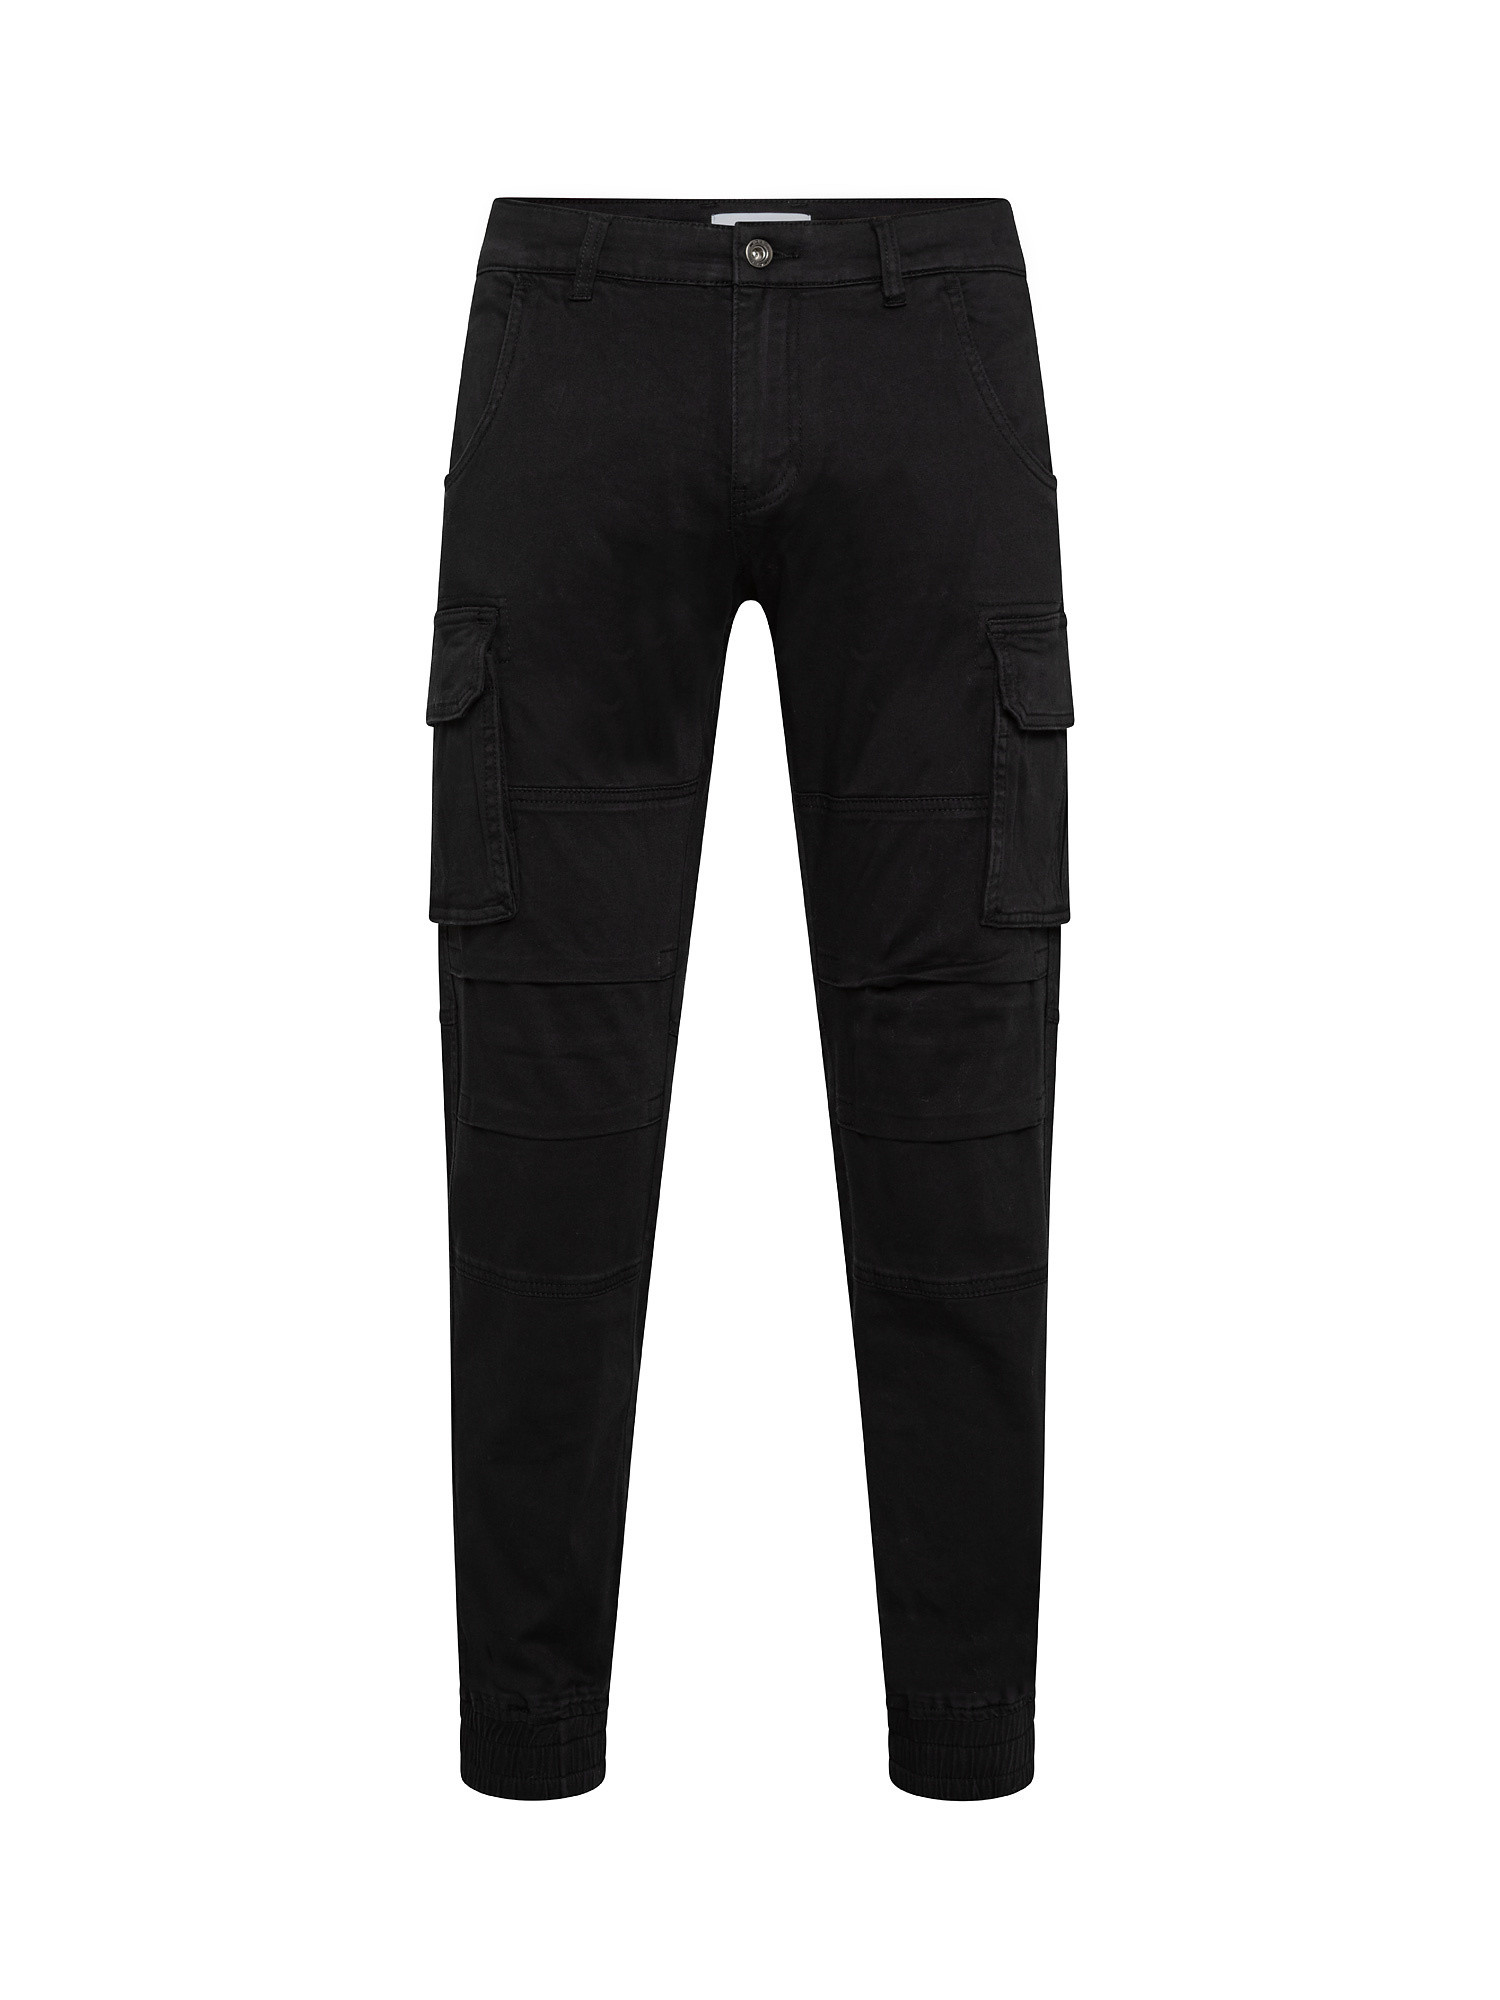 Stretch cotton cargo pants, Black, large image number 0